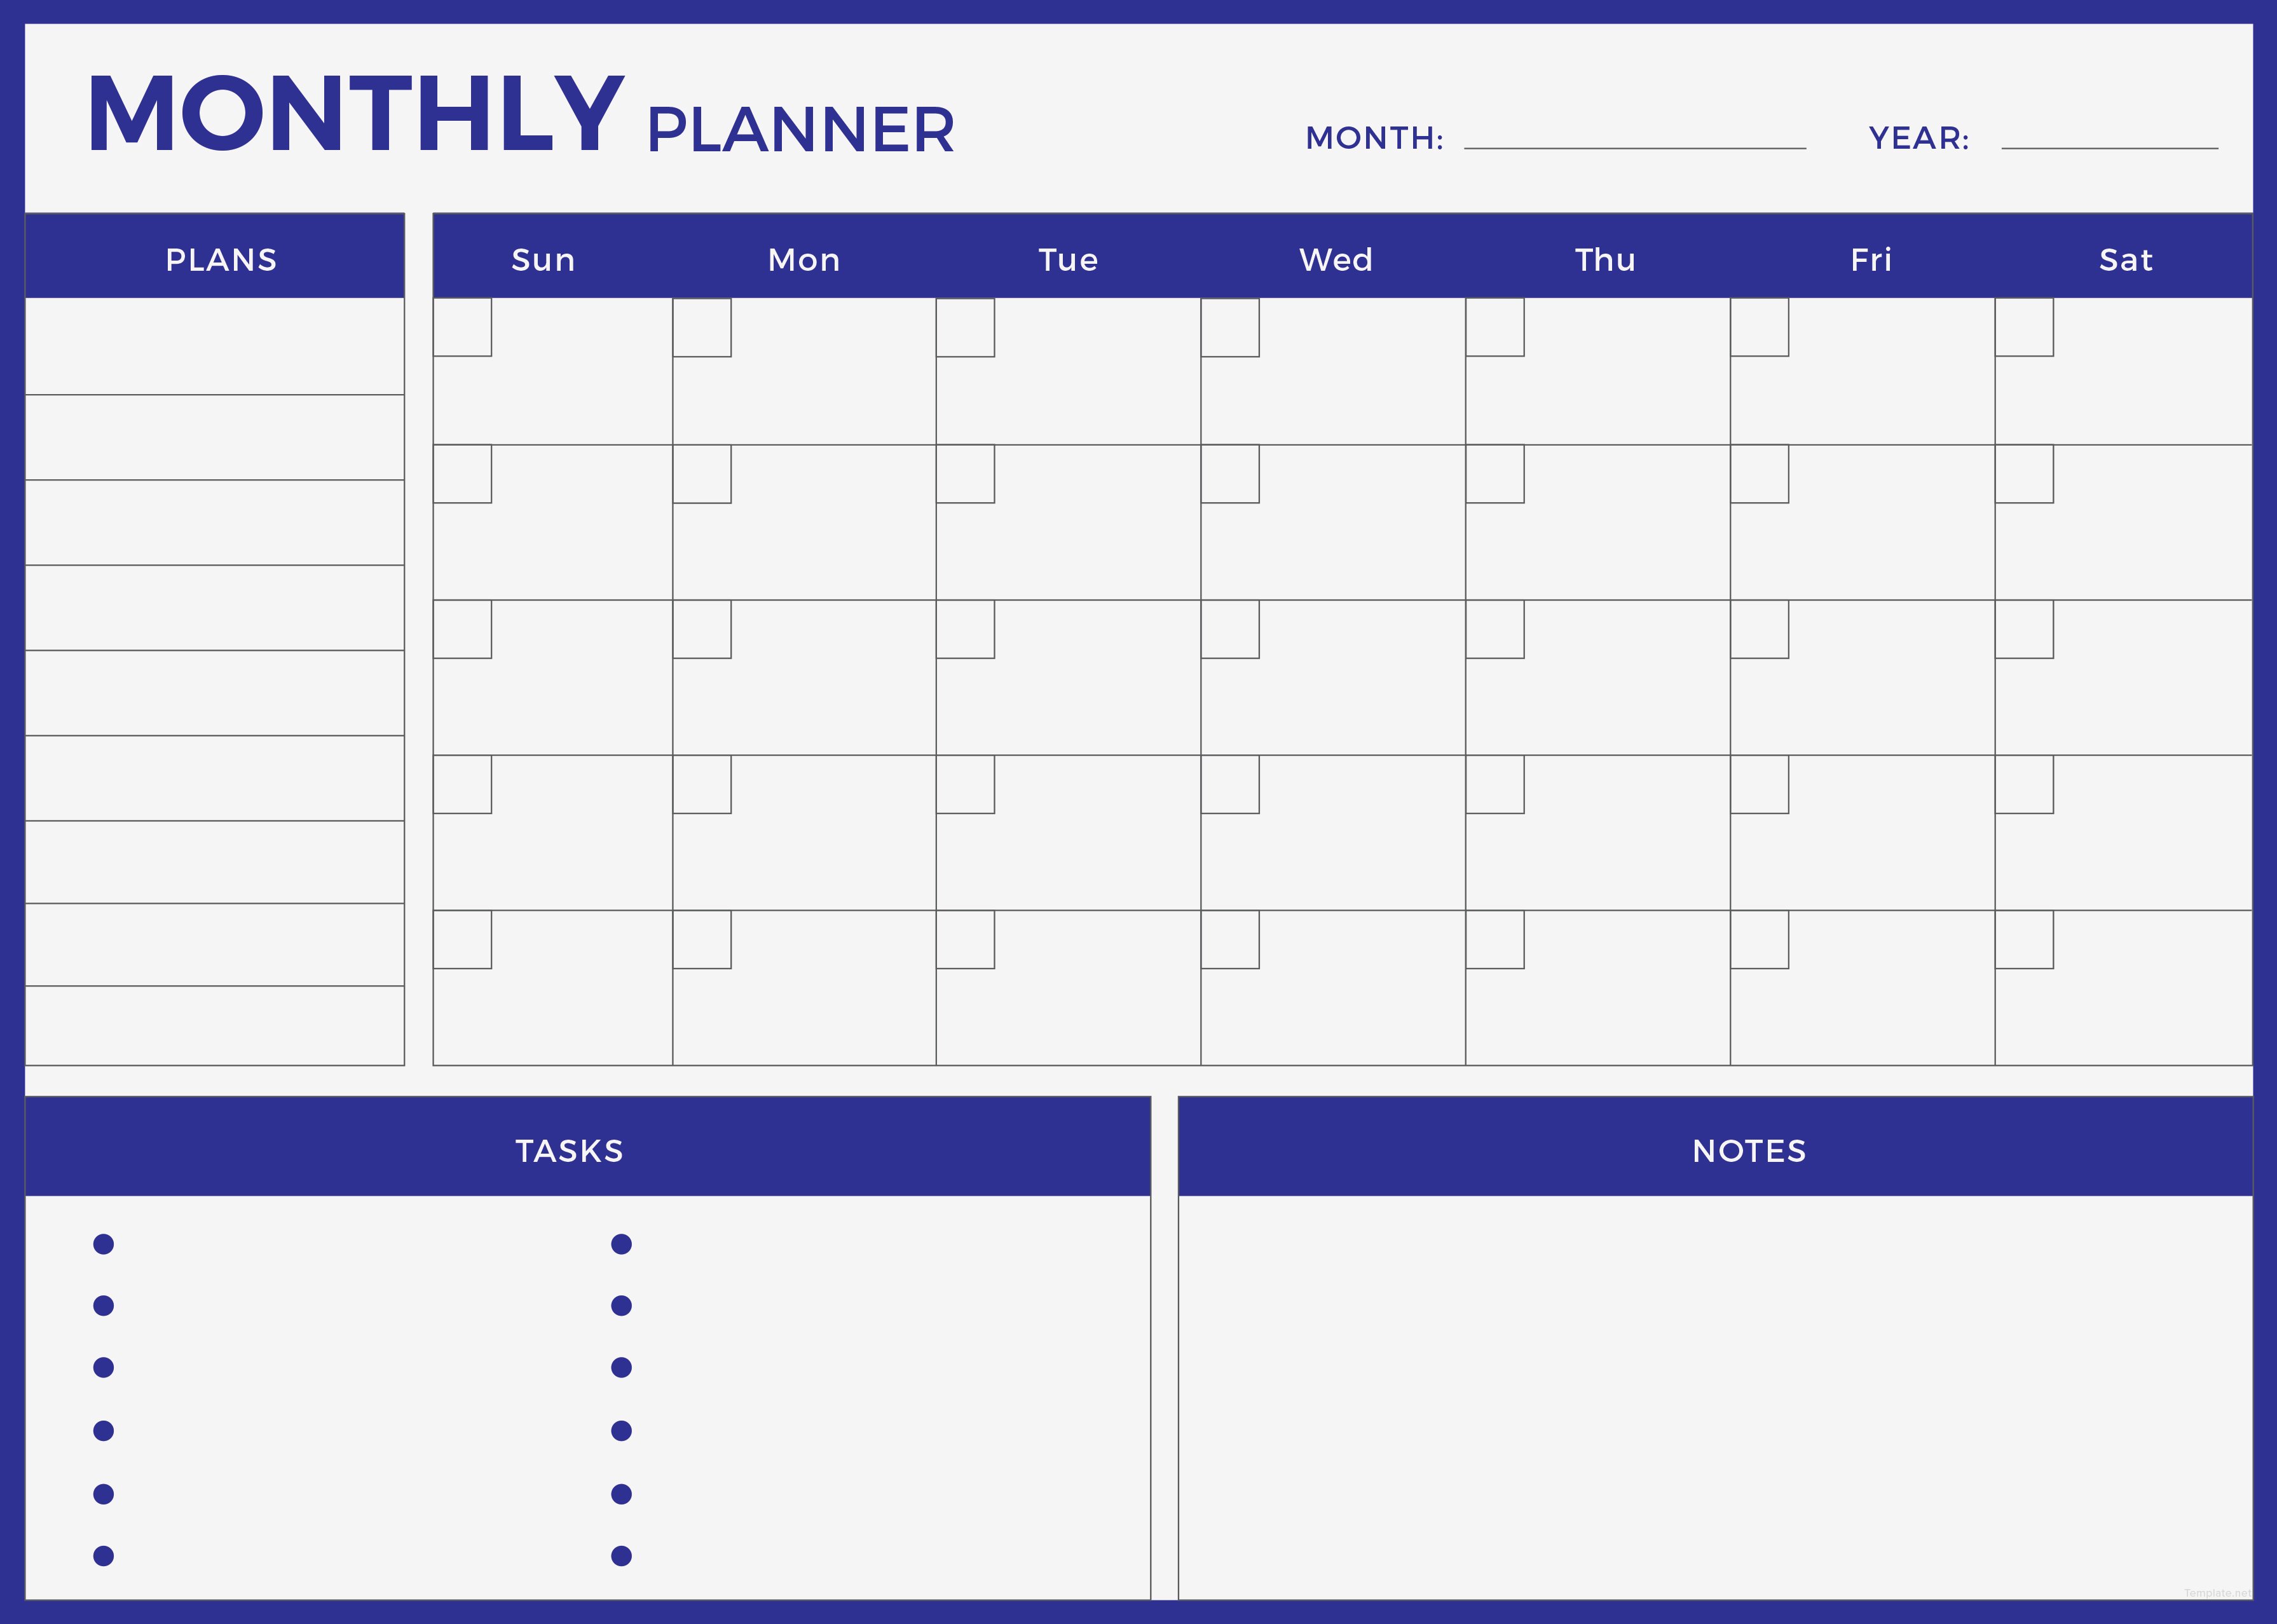 Free Monthly Planner Template in Adobe Adobe Illustrator